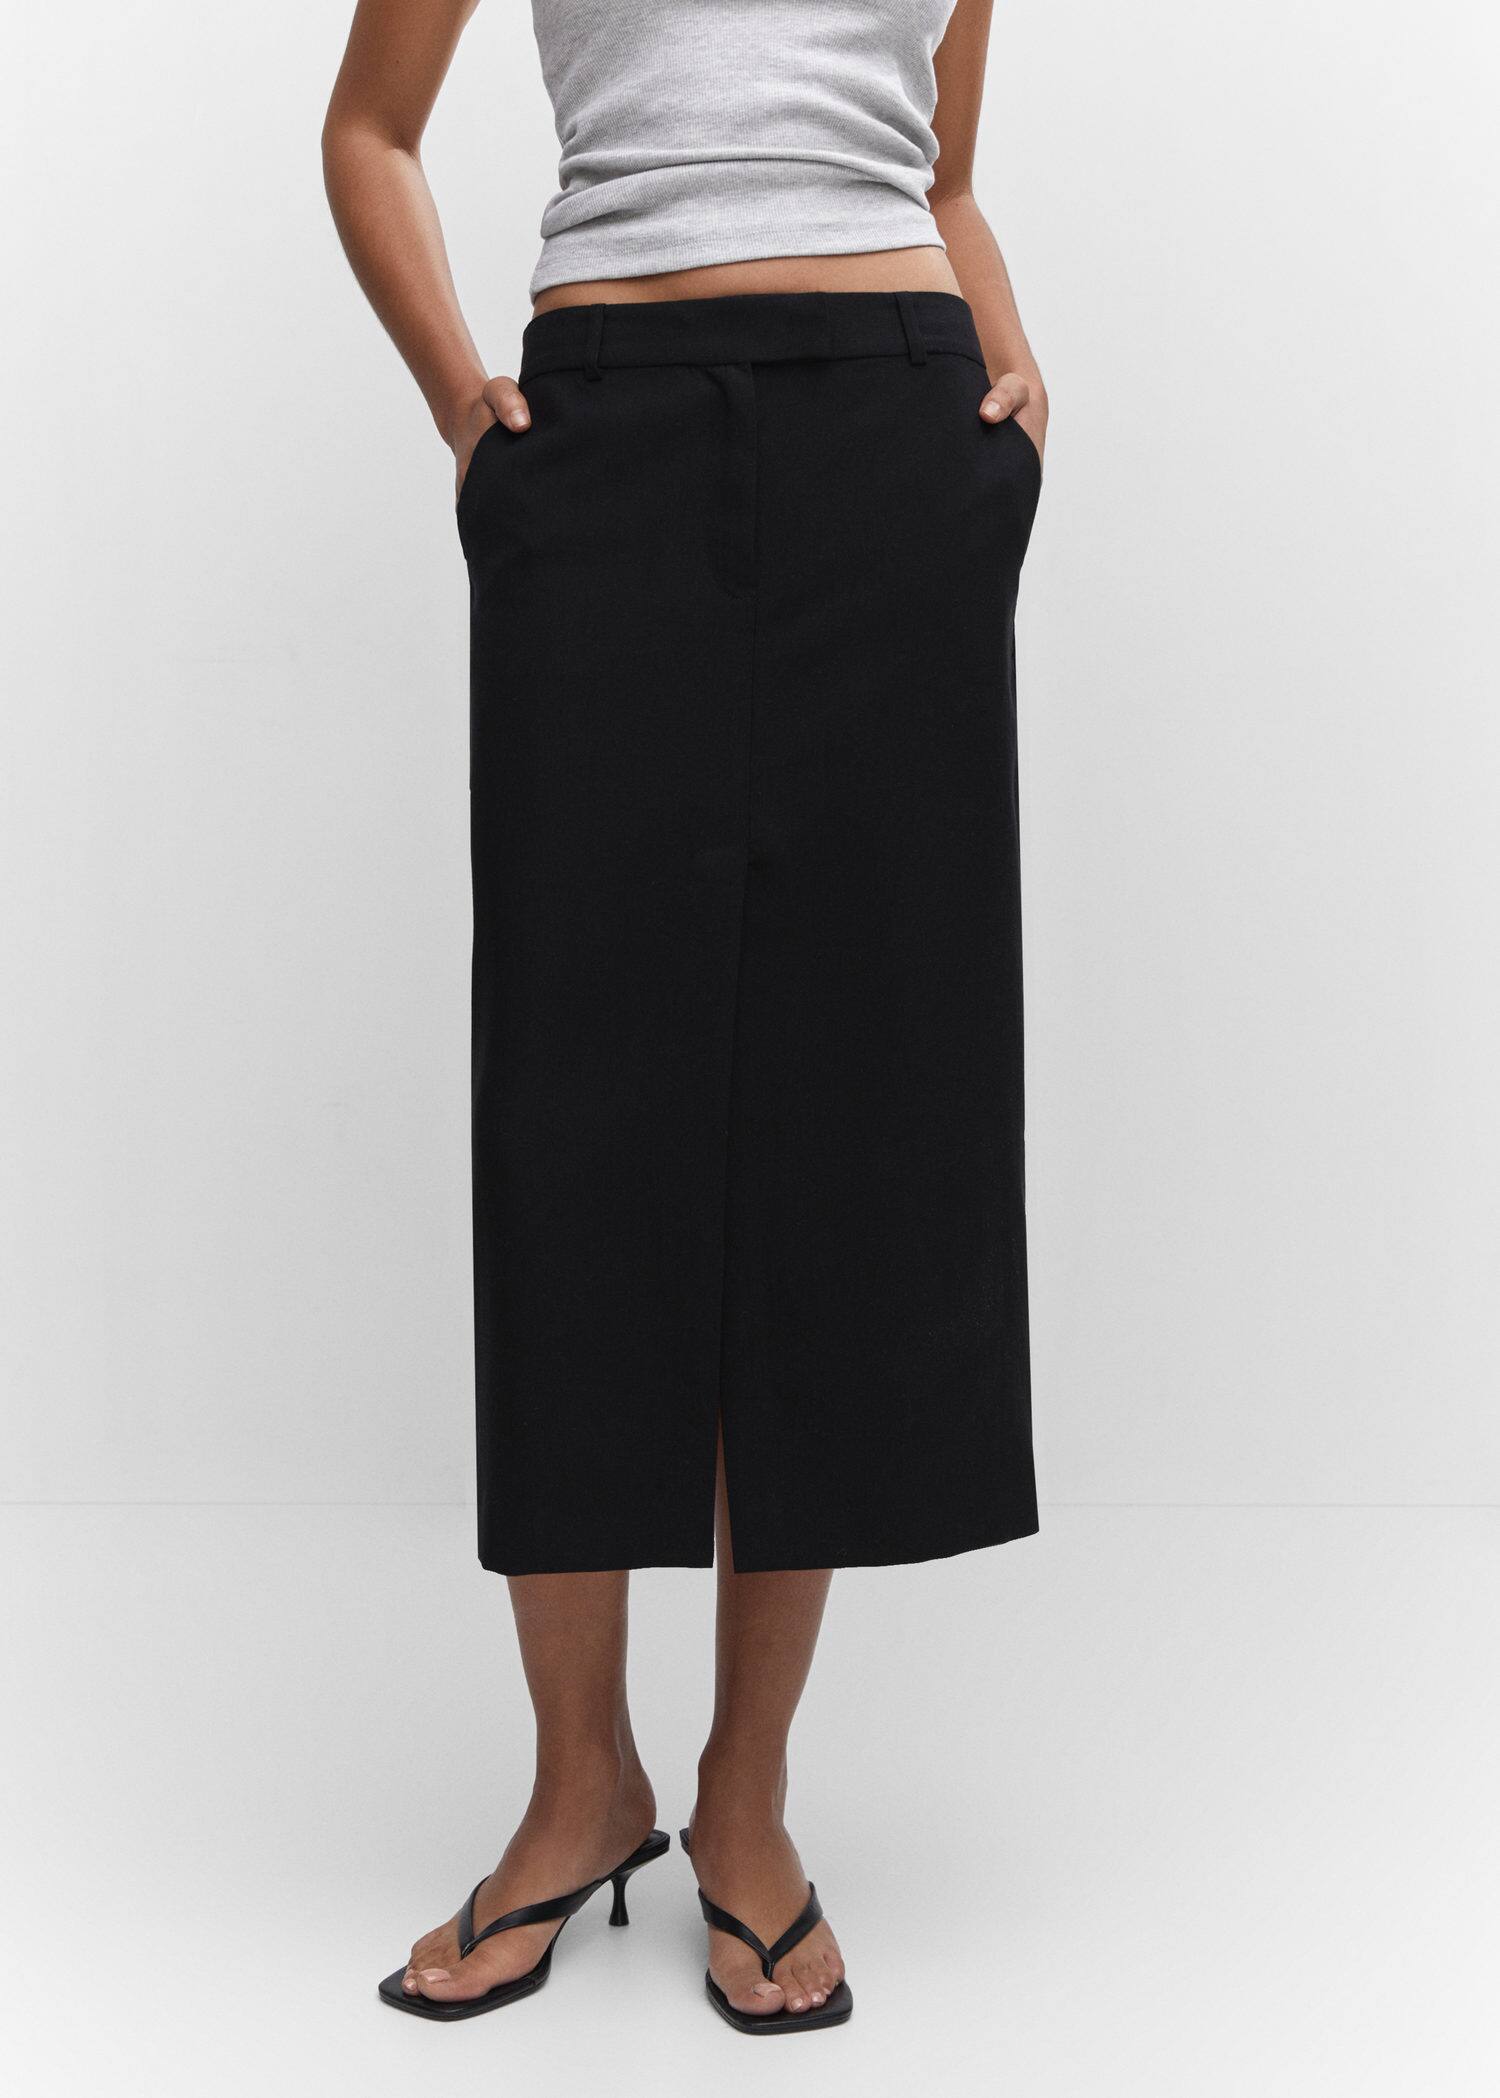 Lyocell skirt with slit - Medium plane